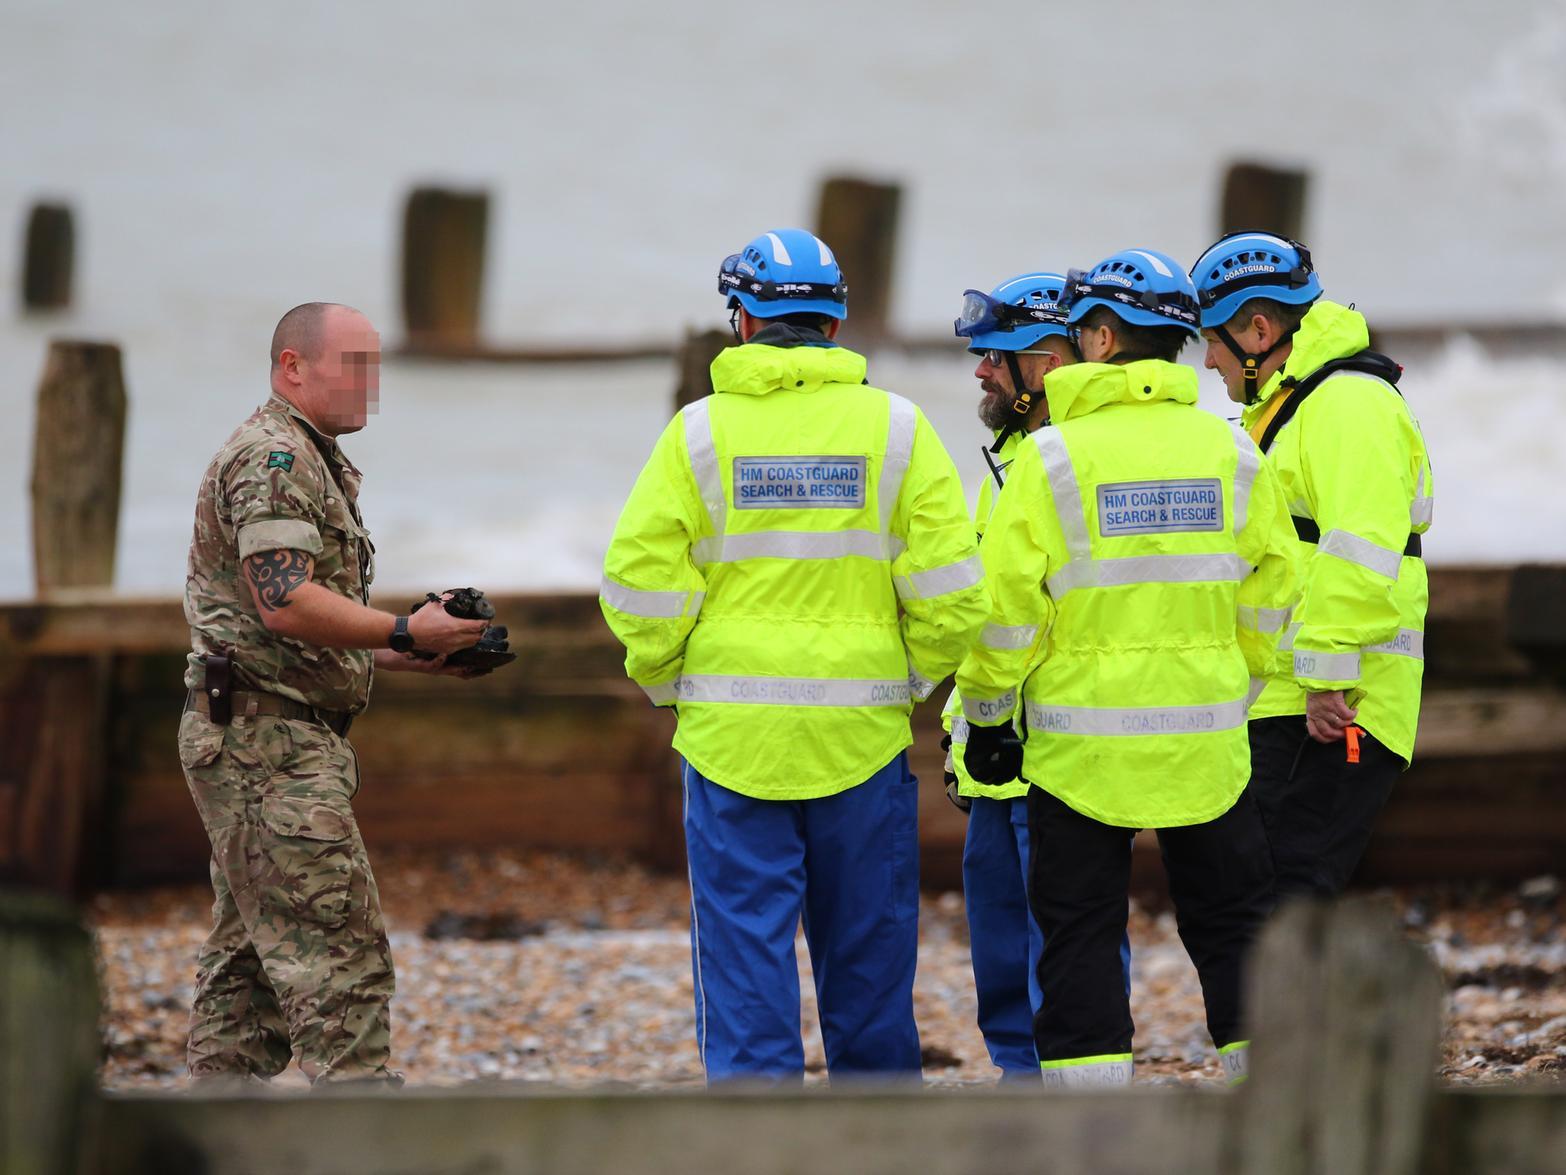 Explosives Ordnance Disposal (EOD) team at Worthing beach